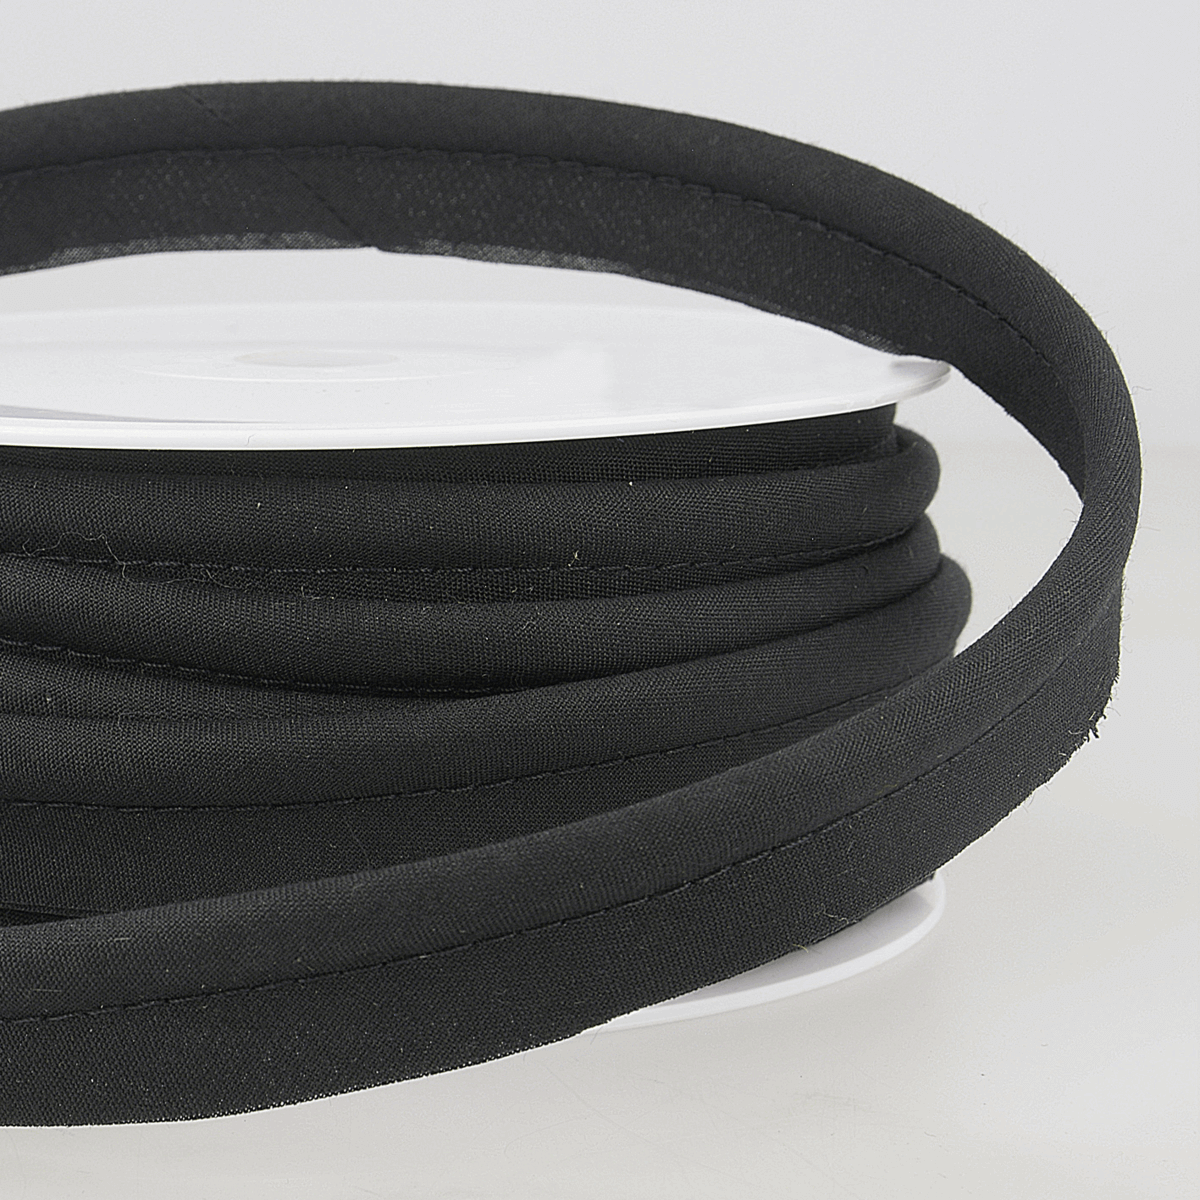 Flanged 18mm wide piping cord 5 mm Polycotton bias binding cut - Per Metre